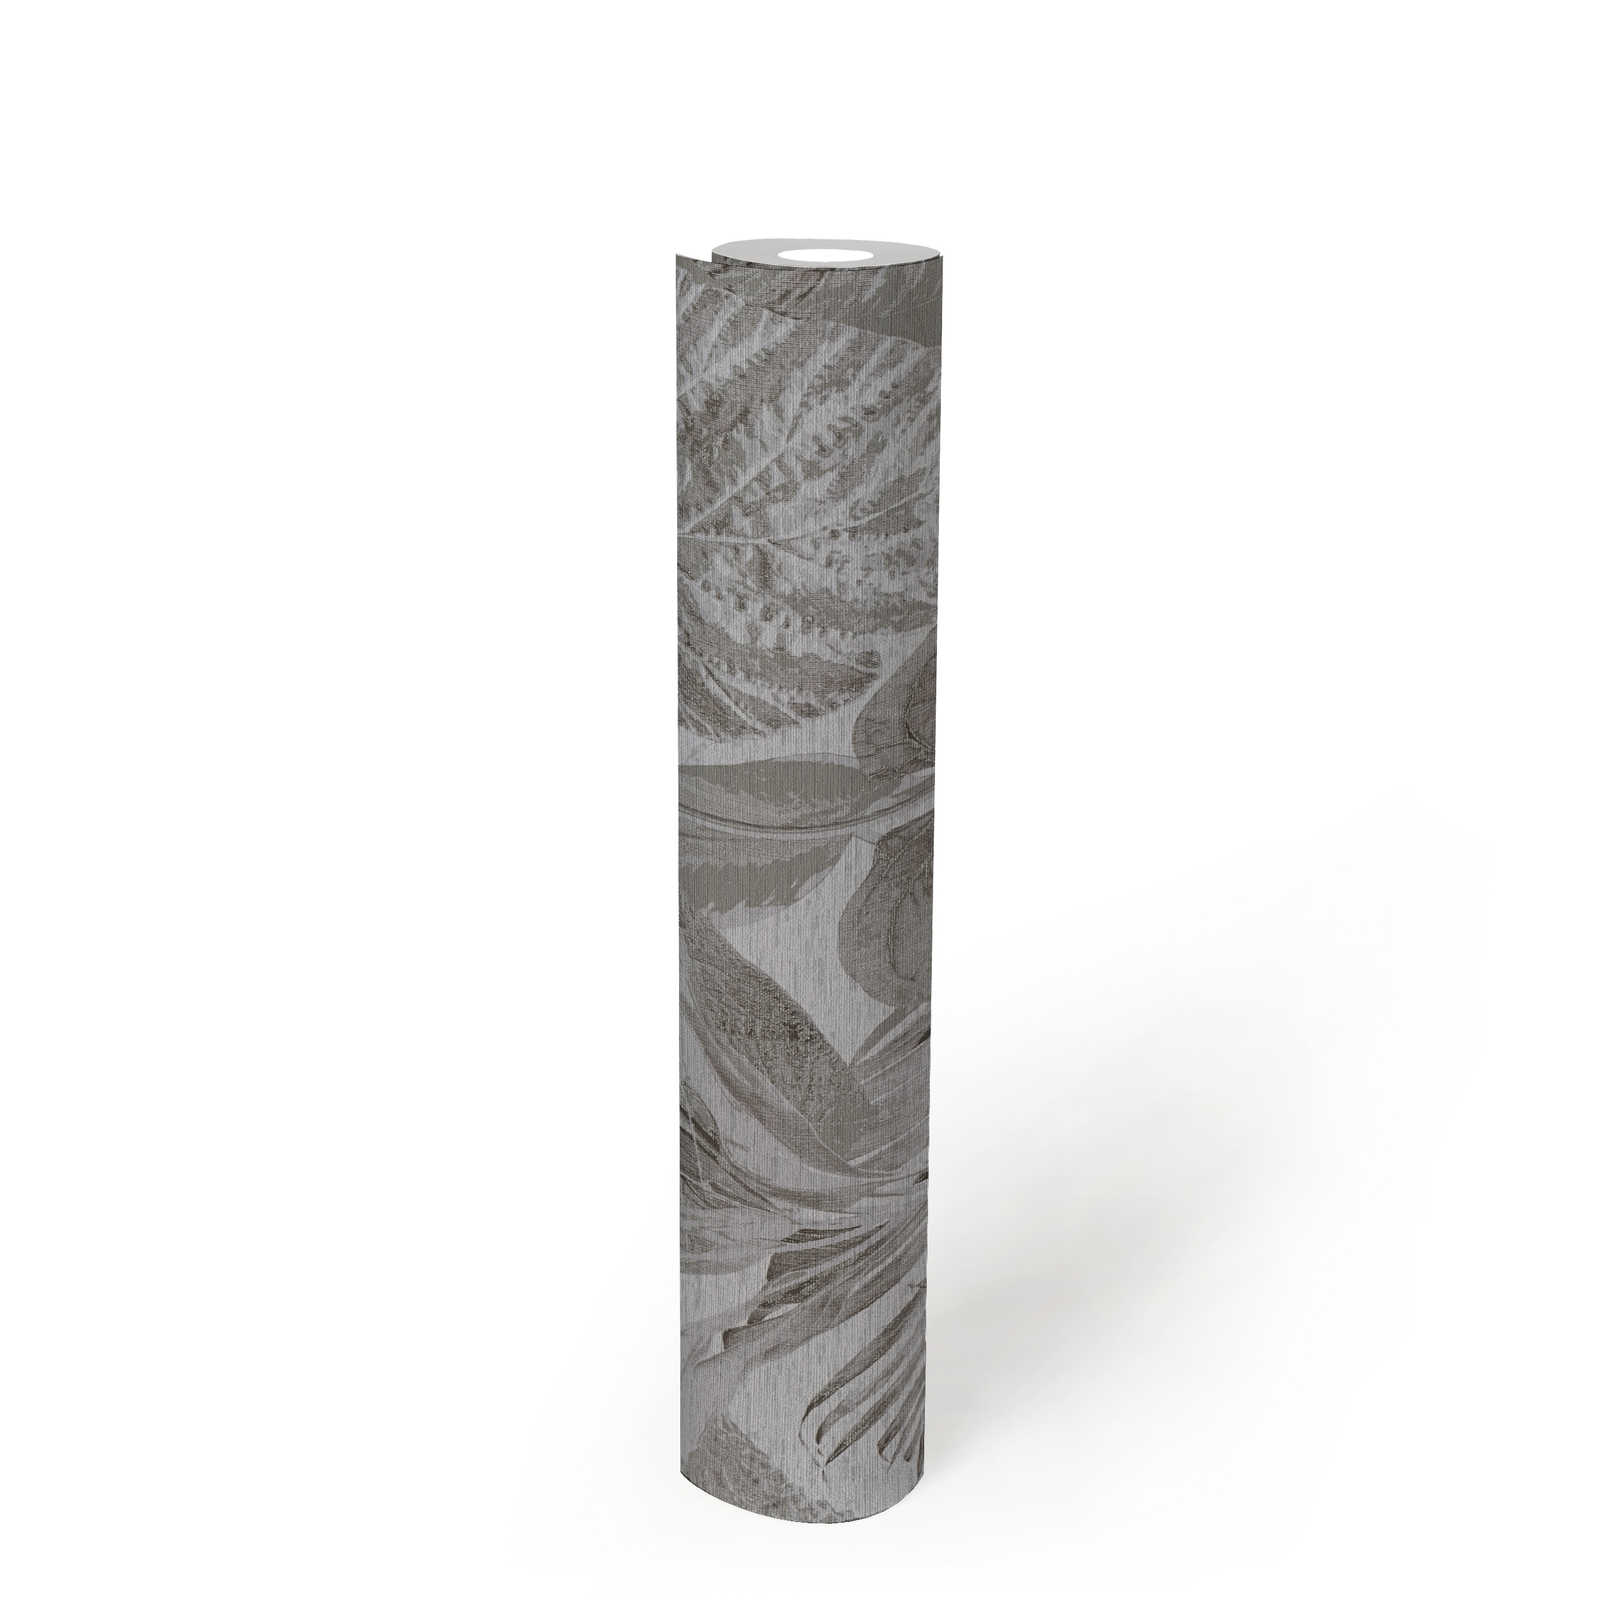             Wallpaper with jungle pattern slightly structured, matt - grey, anthracite
        